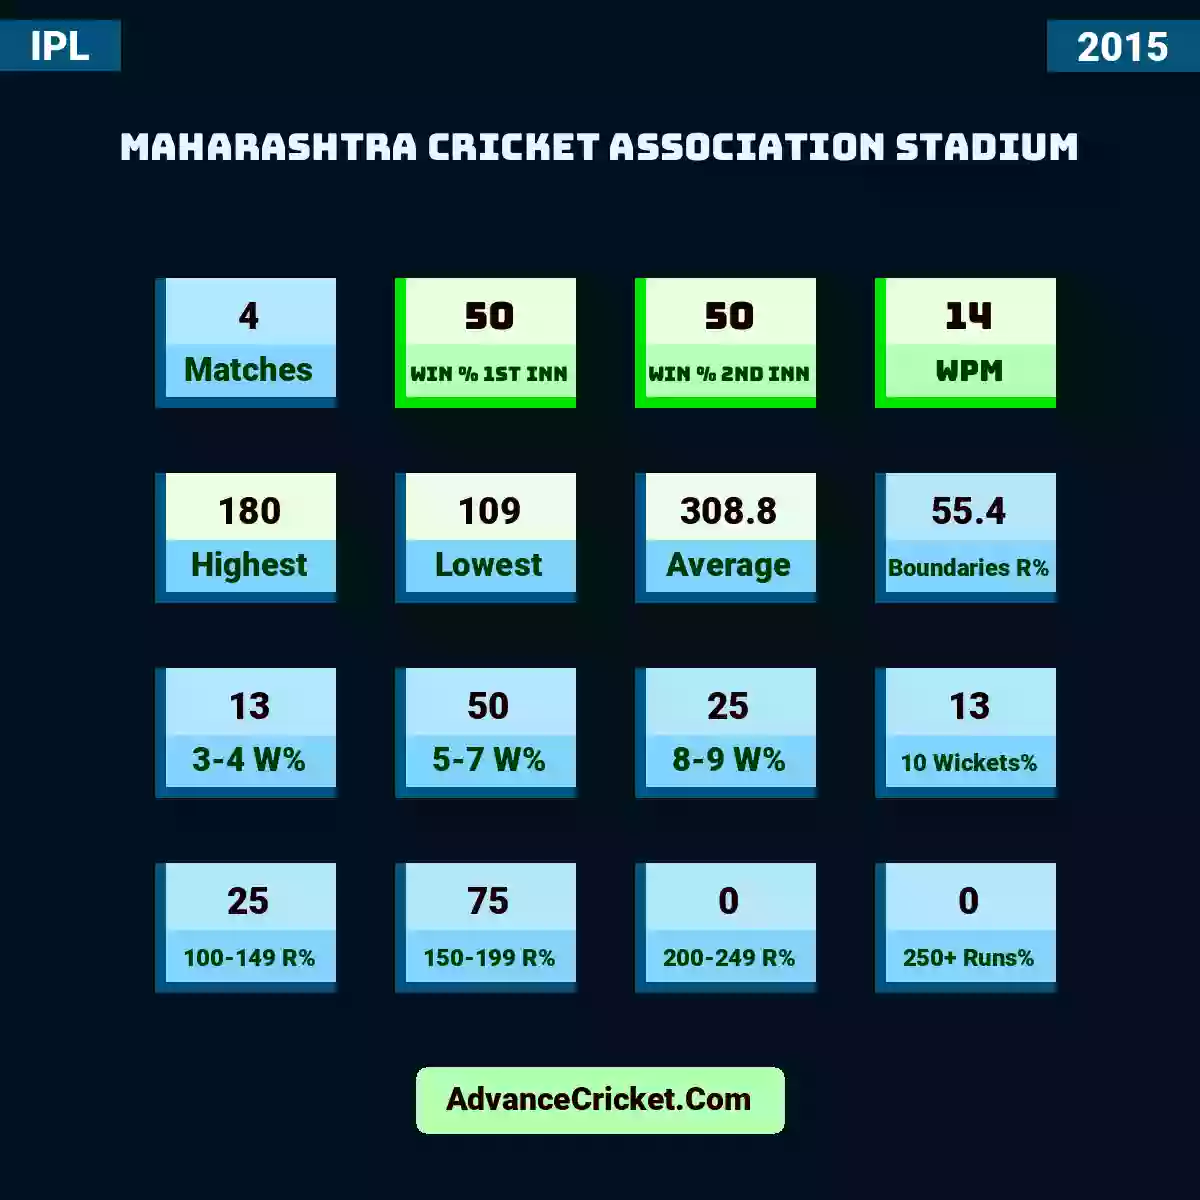 Image showing Maharashtra Cricket Association Stadium with Matches: 4, Win % 1st Inn: 50, Win % 2nd Inn: 50, WPM: 14, Highest: 180, Lowest: 109, Average: 308.8, Boundaries R%: 55.4, 3-4 W%: 13, 5-7 W%: 50, 8-9 W%: 25, 10 Wickets%: 13, 100-149 R%: 25, 150-199 R%: 75, 200-249 R%: 0, 250+ Runs%: 0.